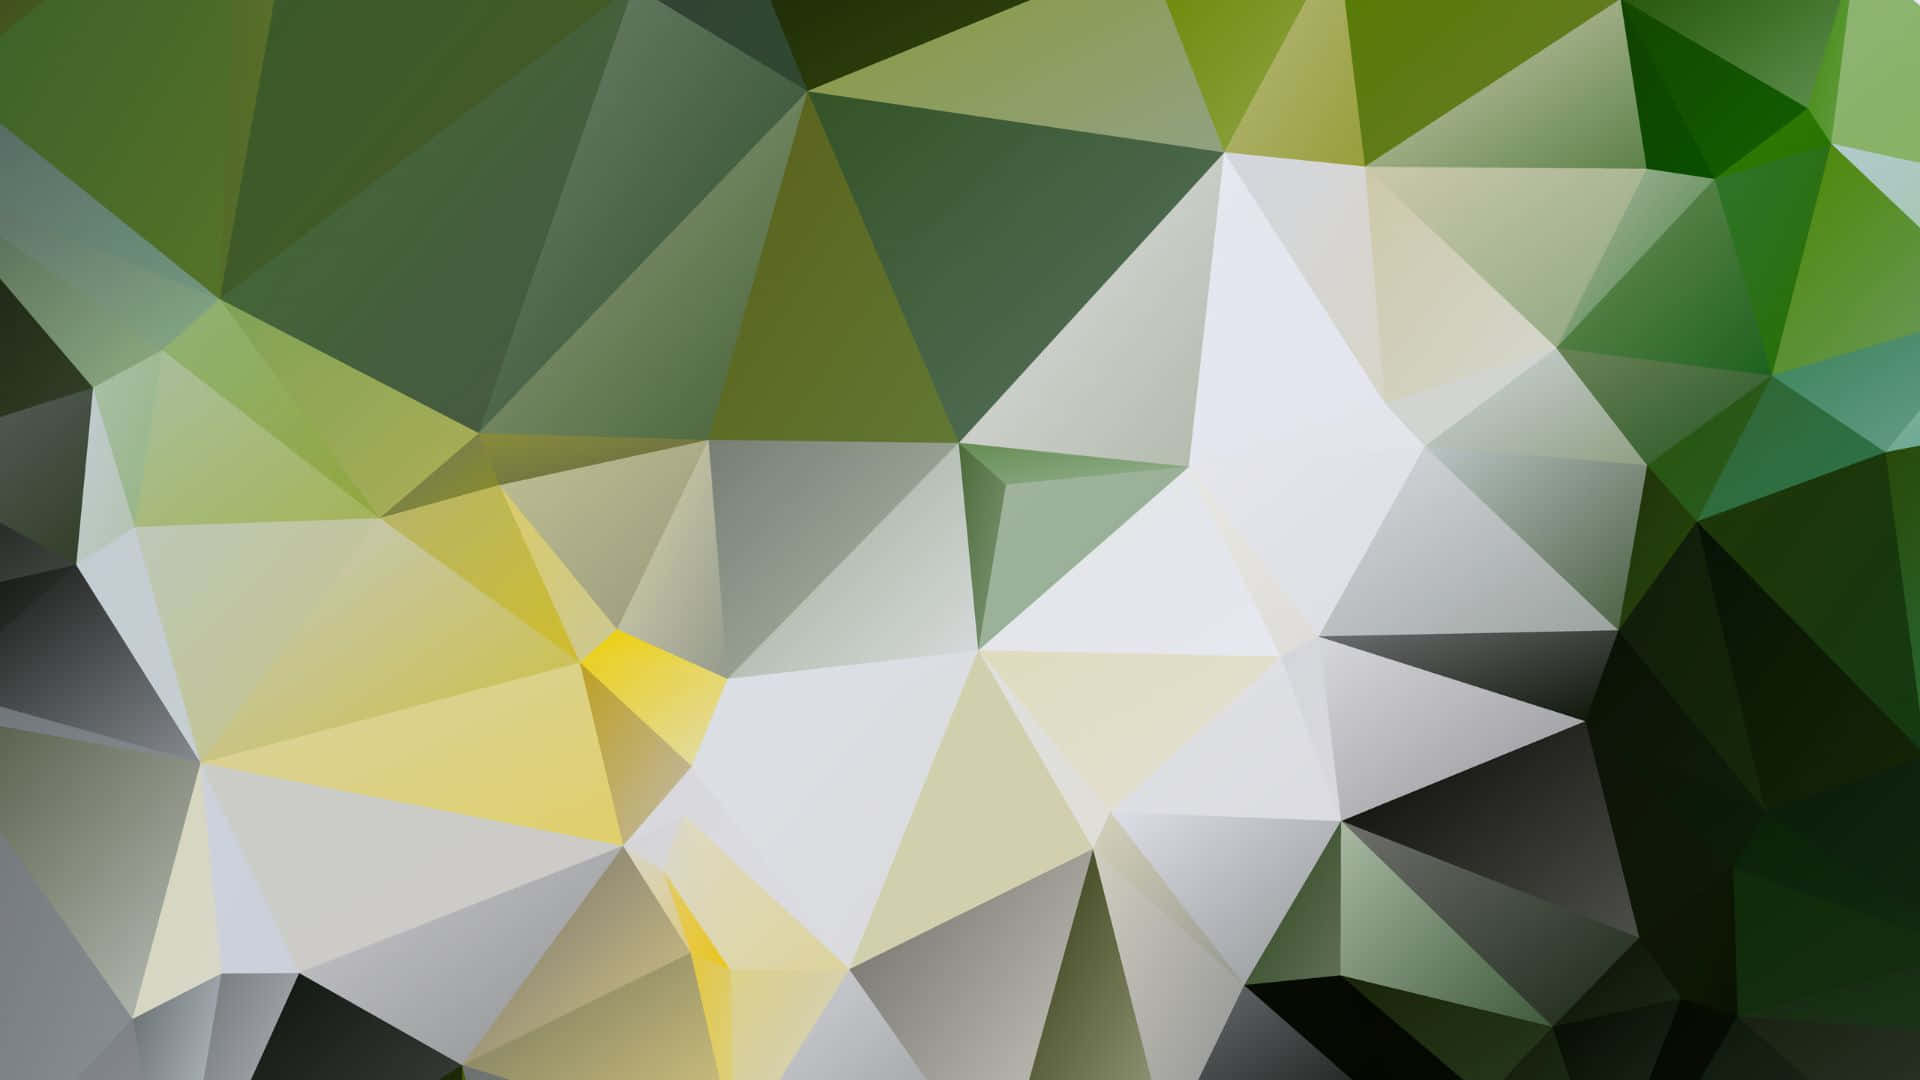 Green Geometric Images - Free Download on Freepik